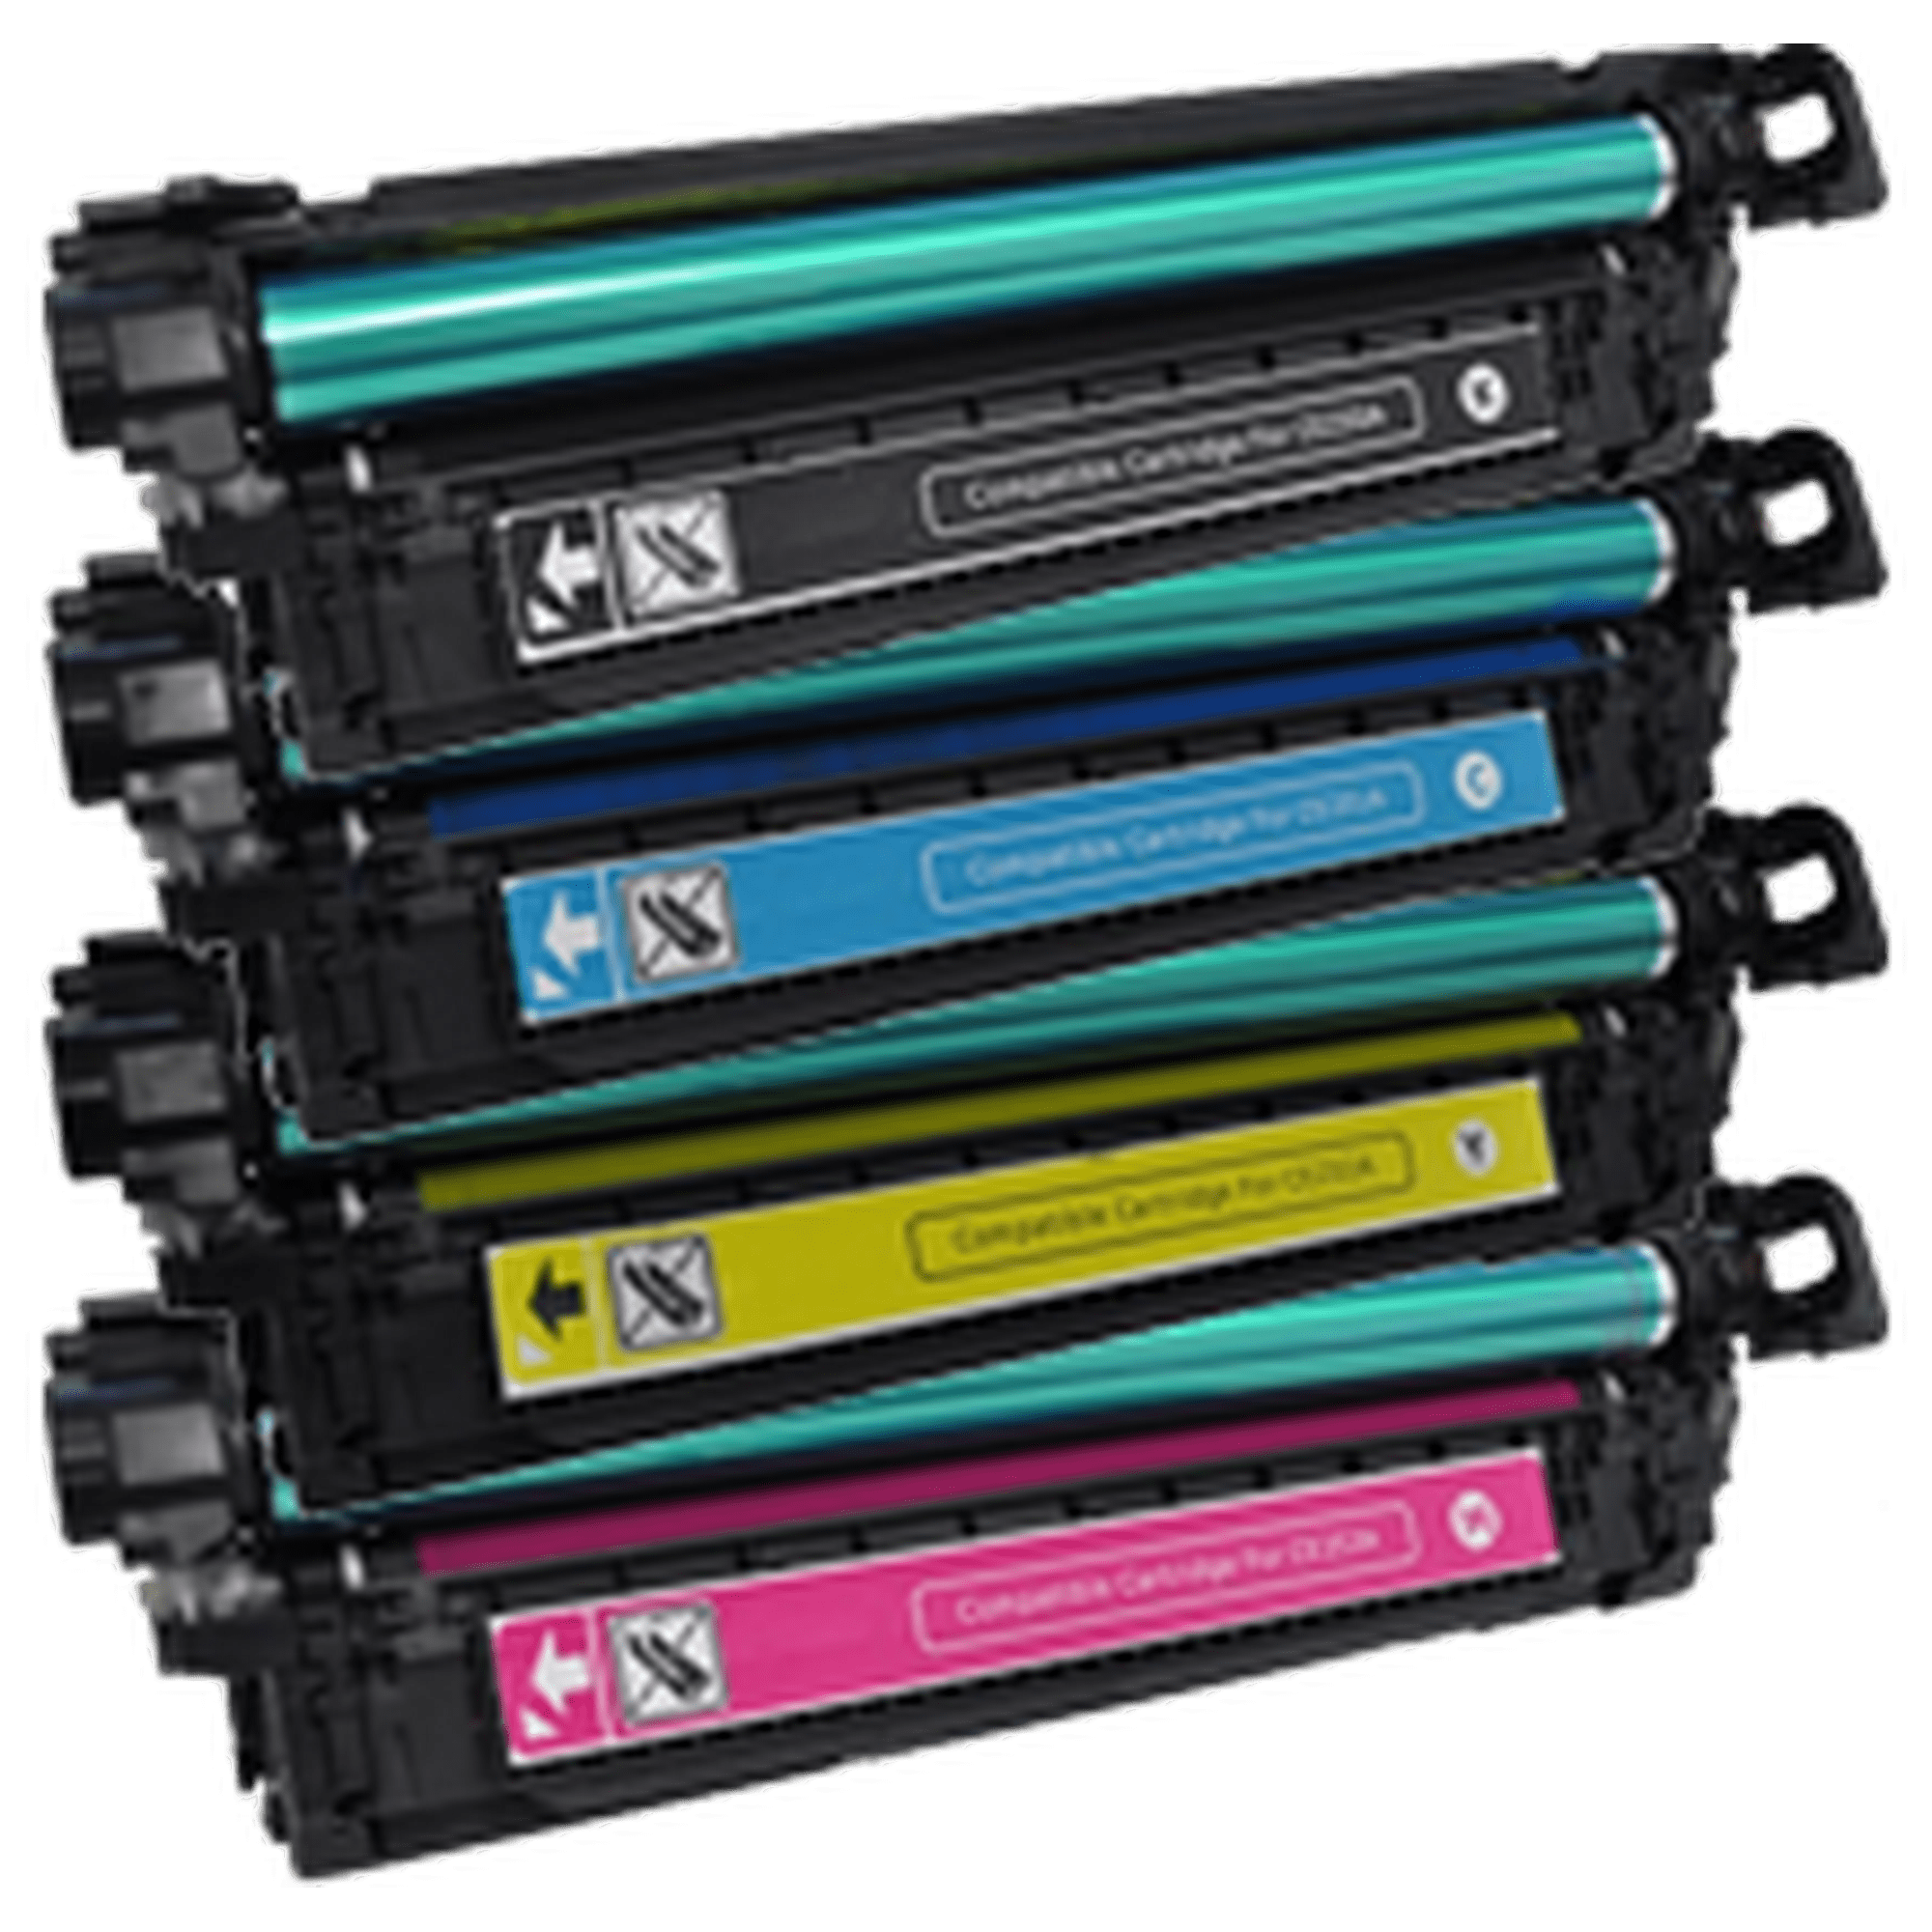 Zoomtoner Compatible HP Color laserJet CP3525 HP CP3525 laser Toner Cartridge Black Cyan Yellow Magenta (Black High Yield) | Walmart Canada